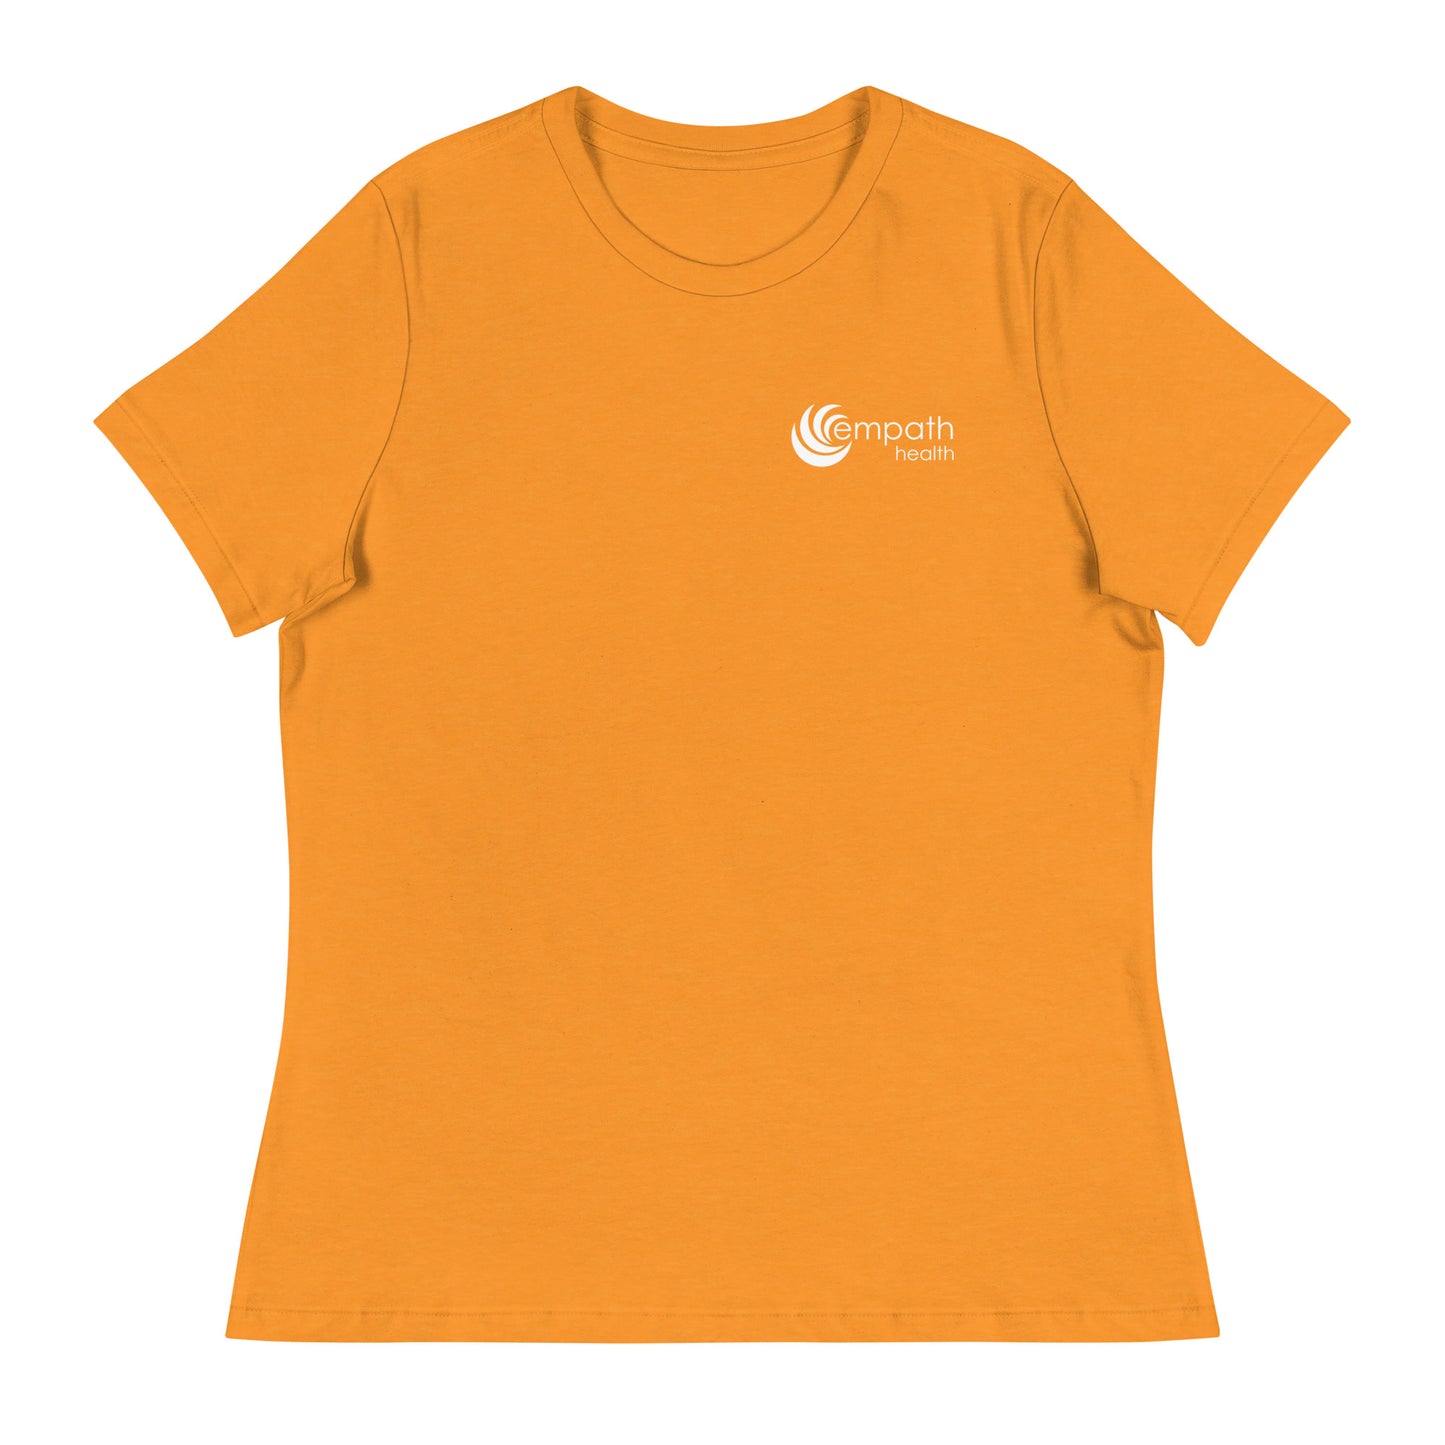 Women's Classic T-shirt - Empath Store